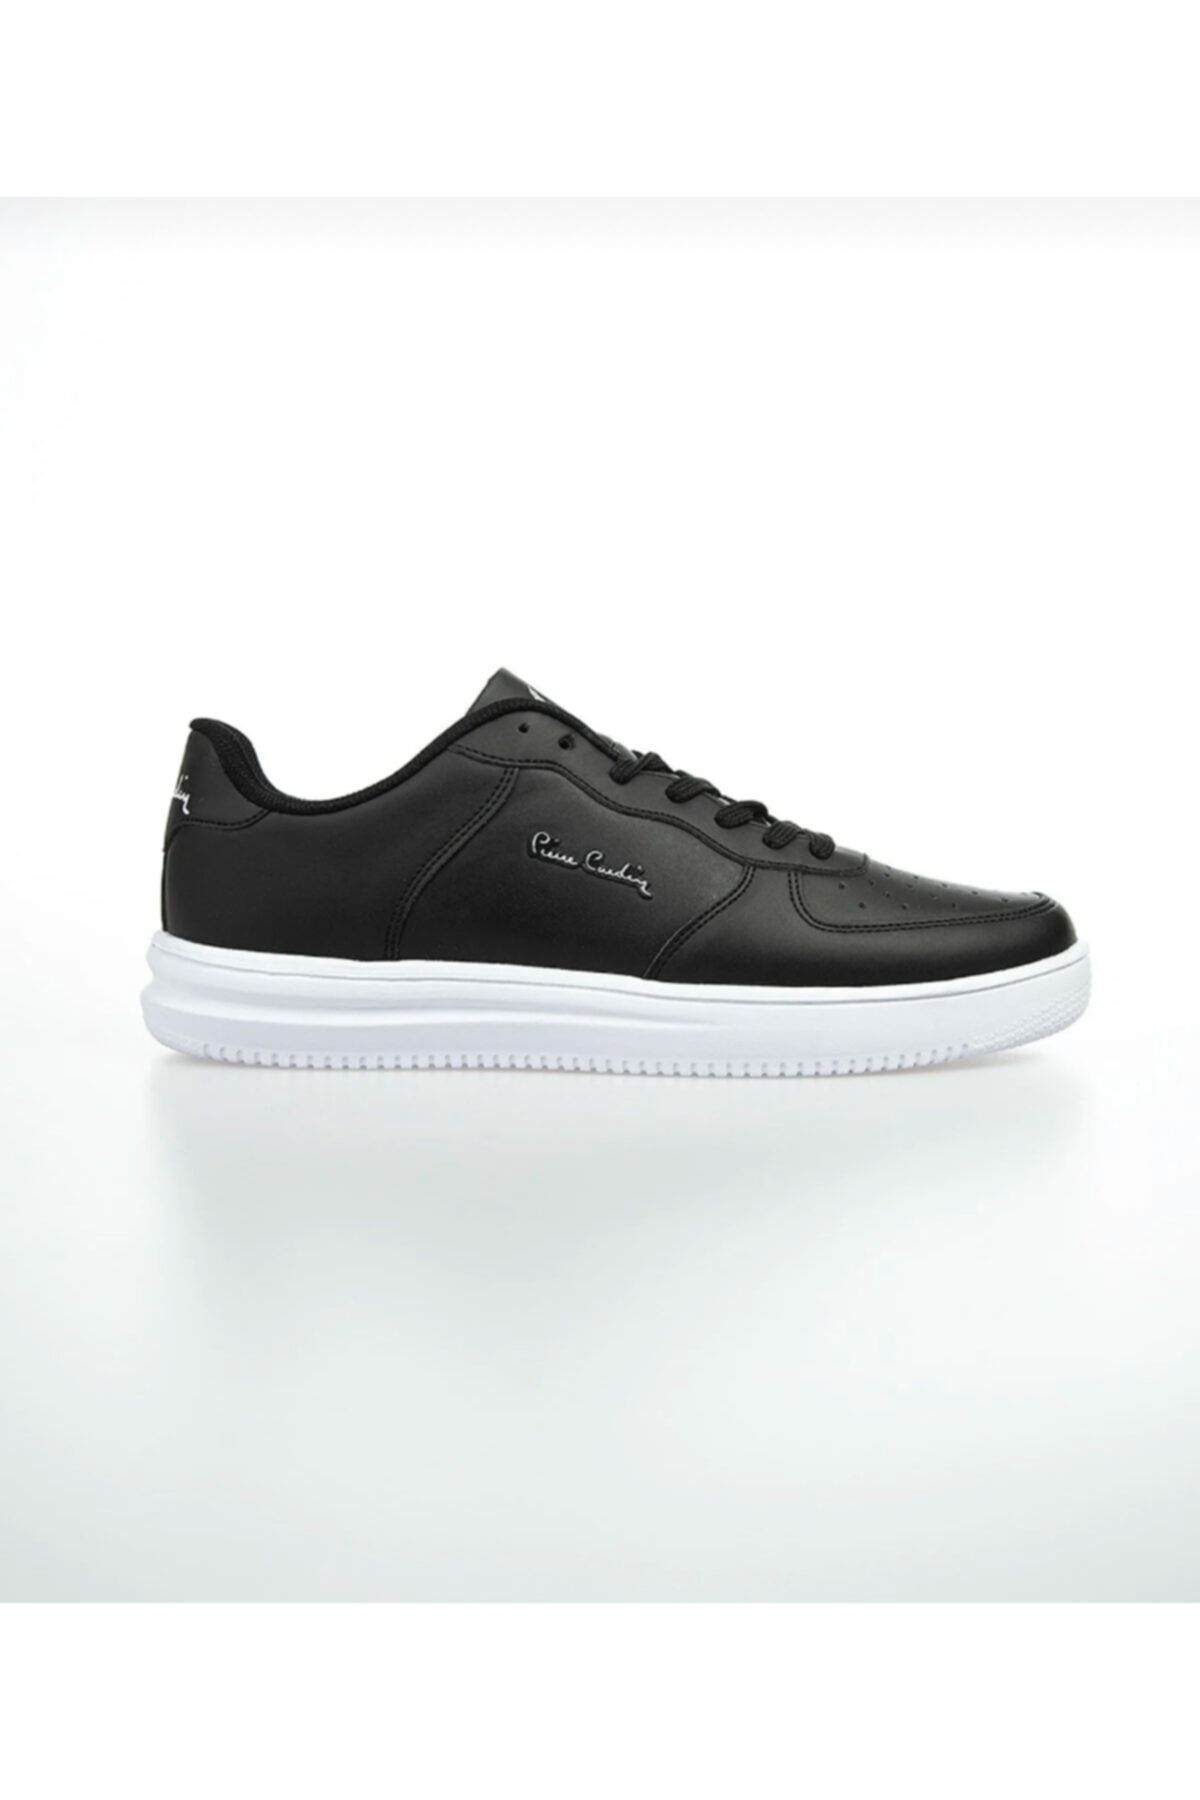 Pierre Cardin Pc-10155 Siyah Sneaker Ayakkabı